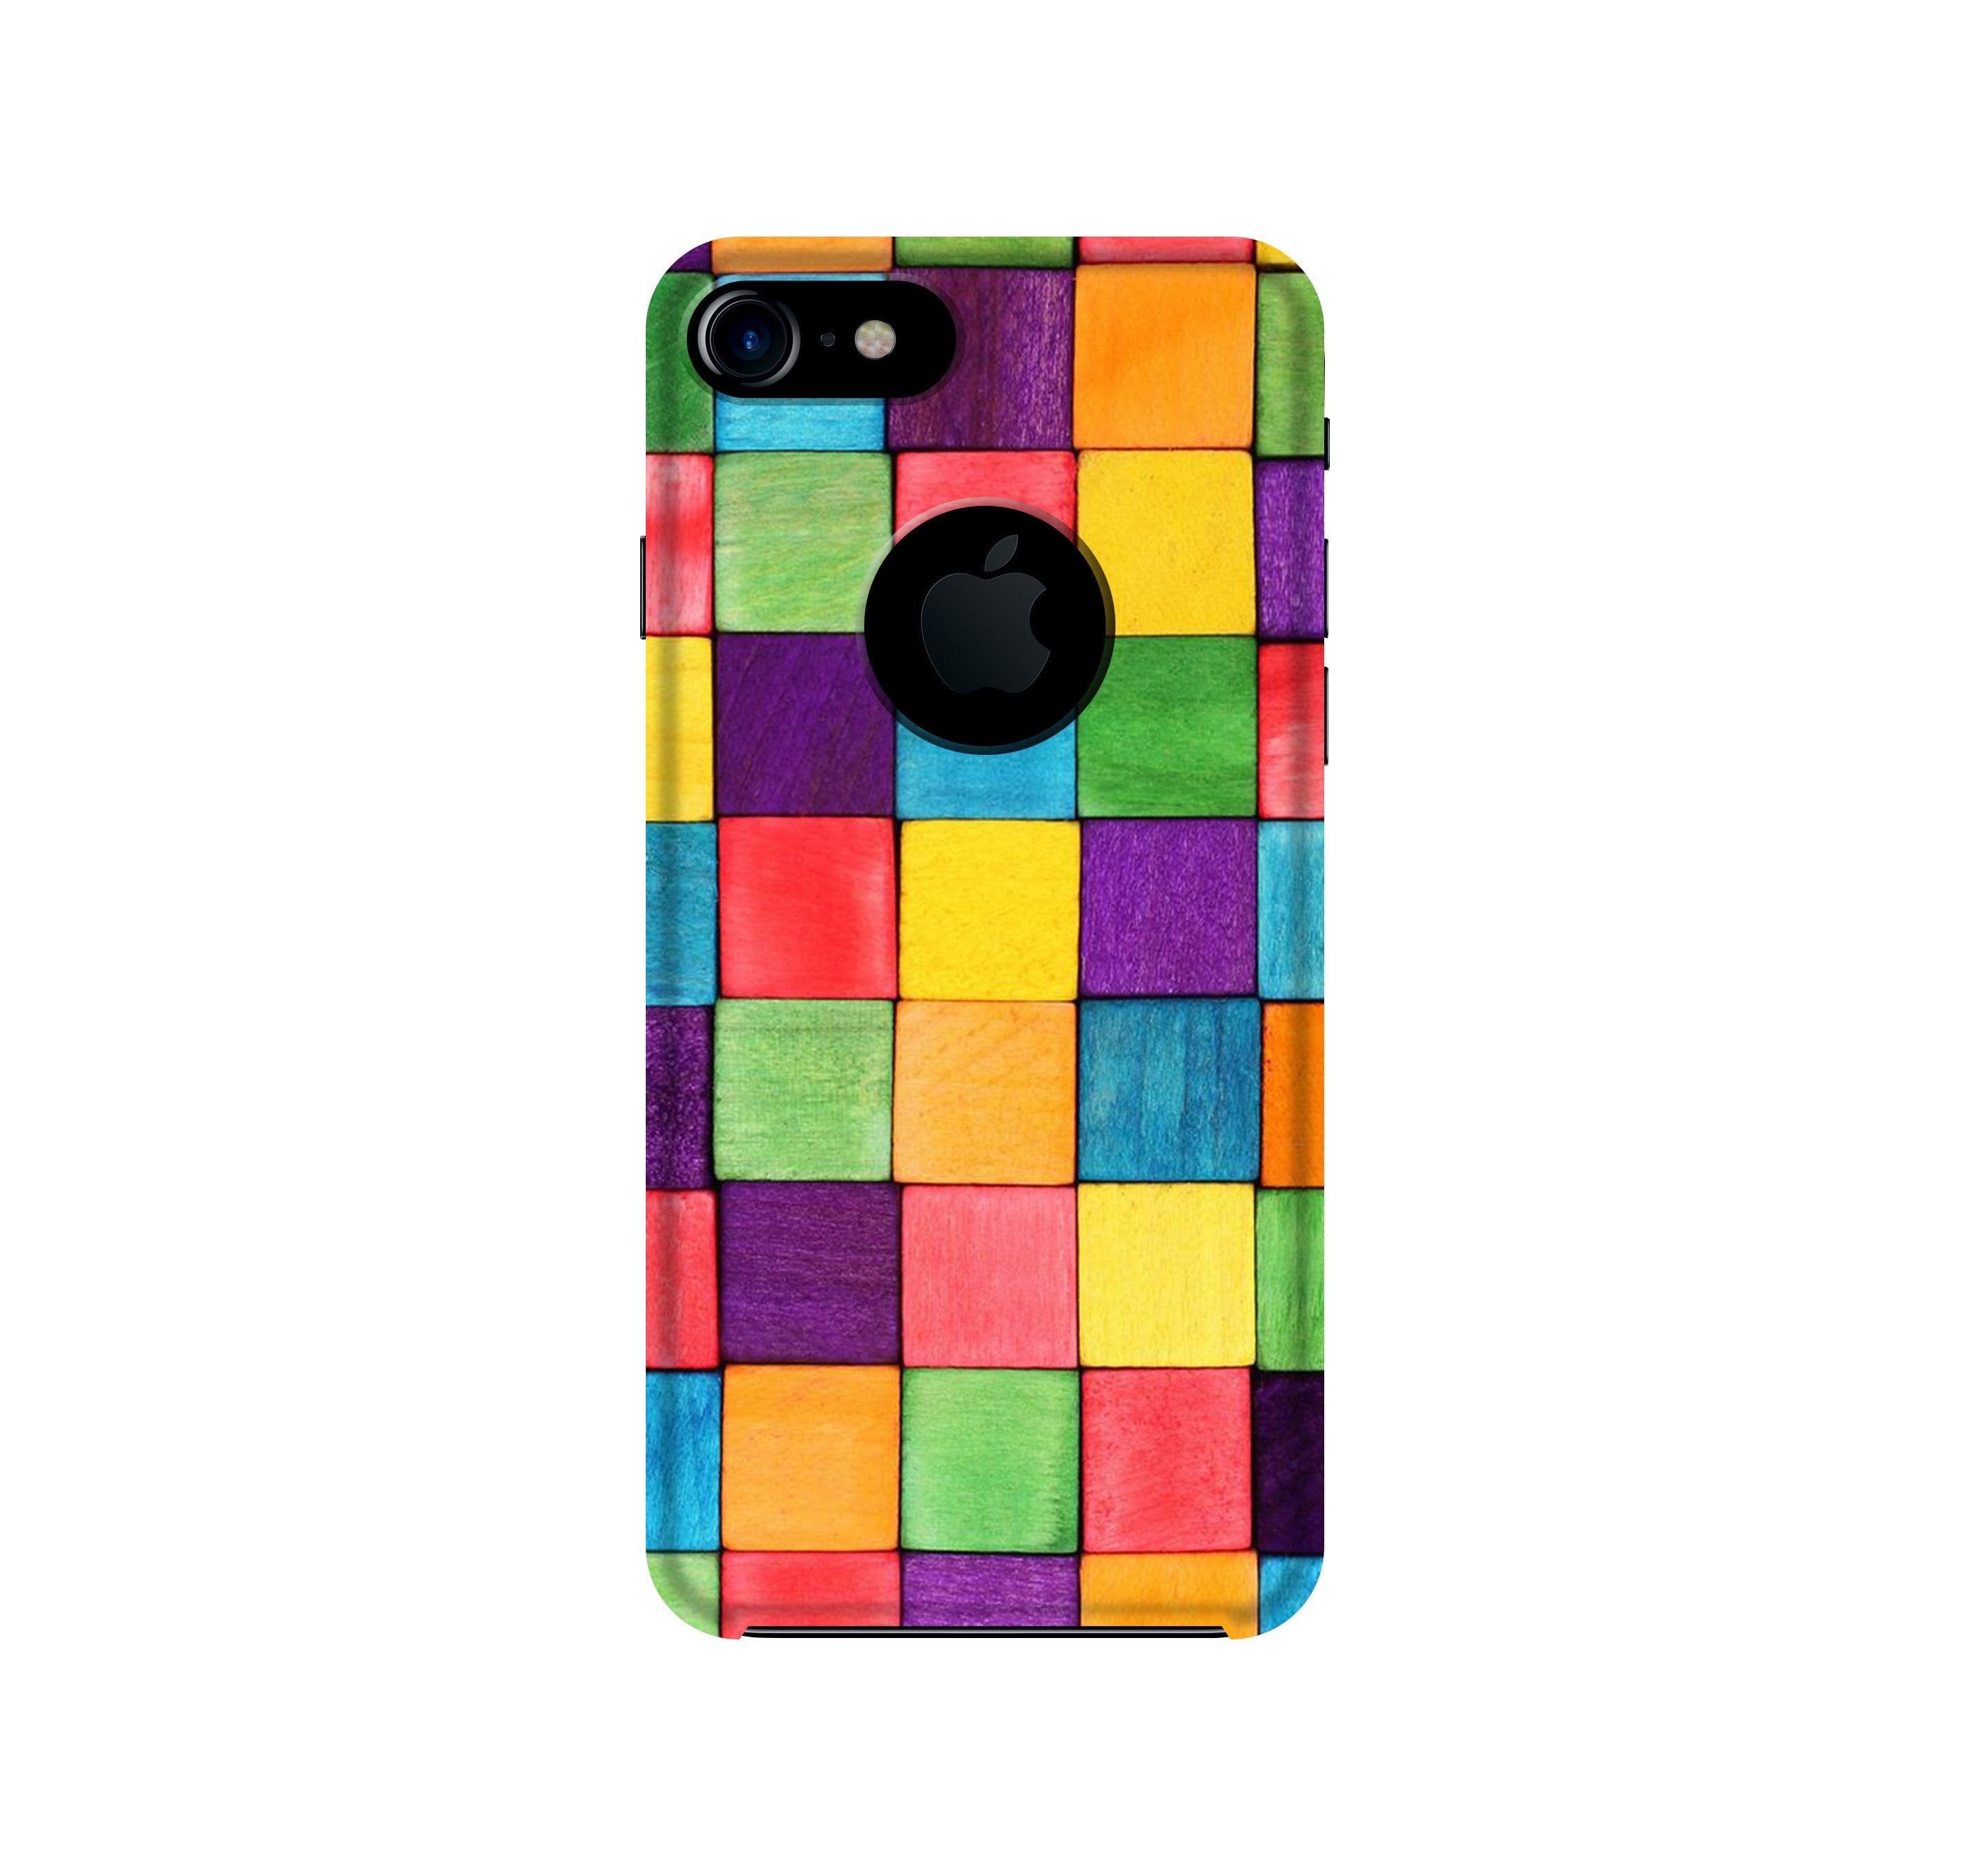 Colorful Square Case for iPhone 7 logo cut (Design No. 218)